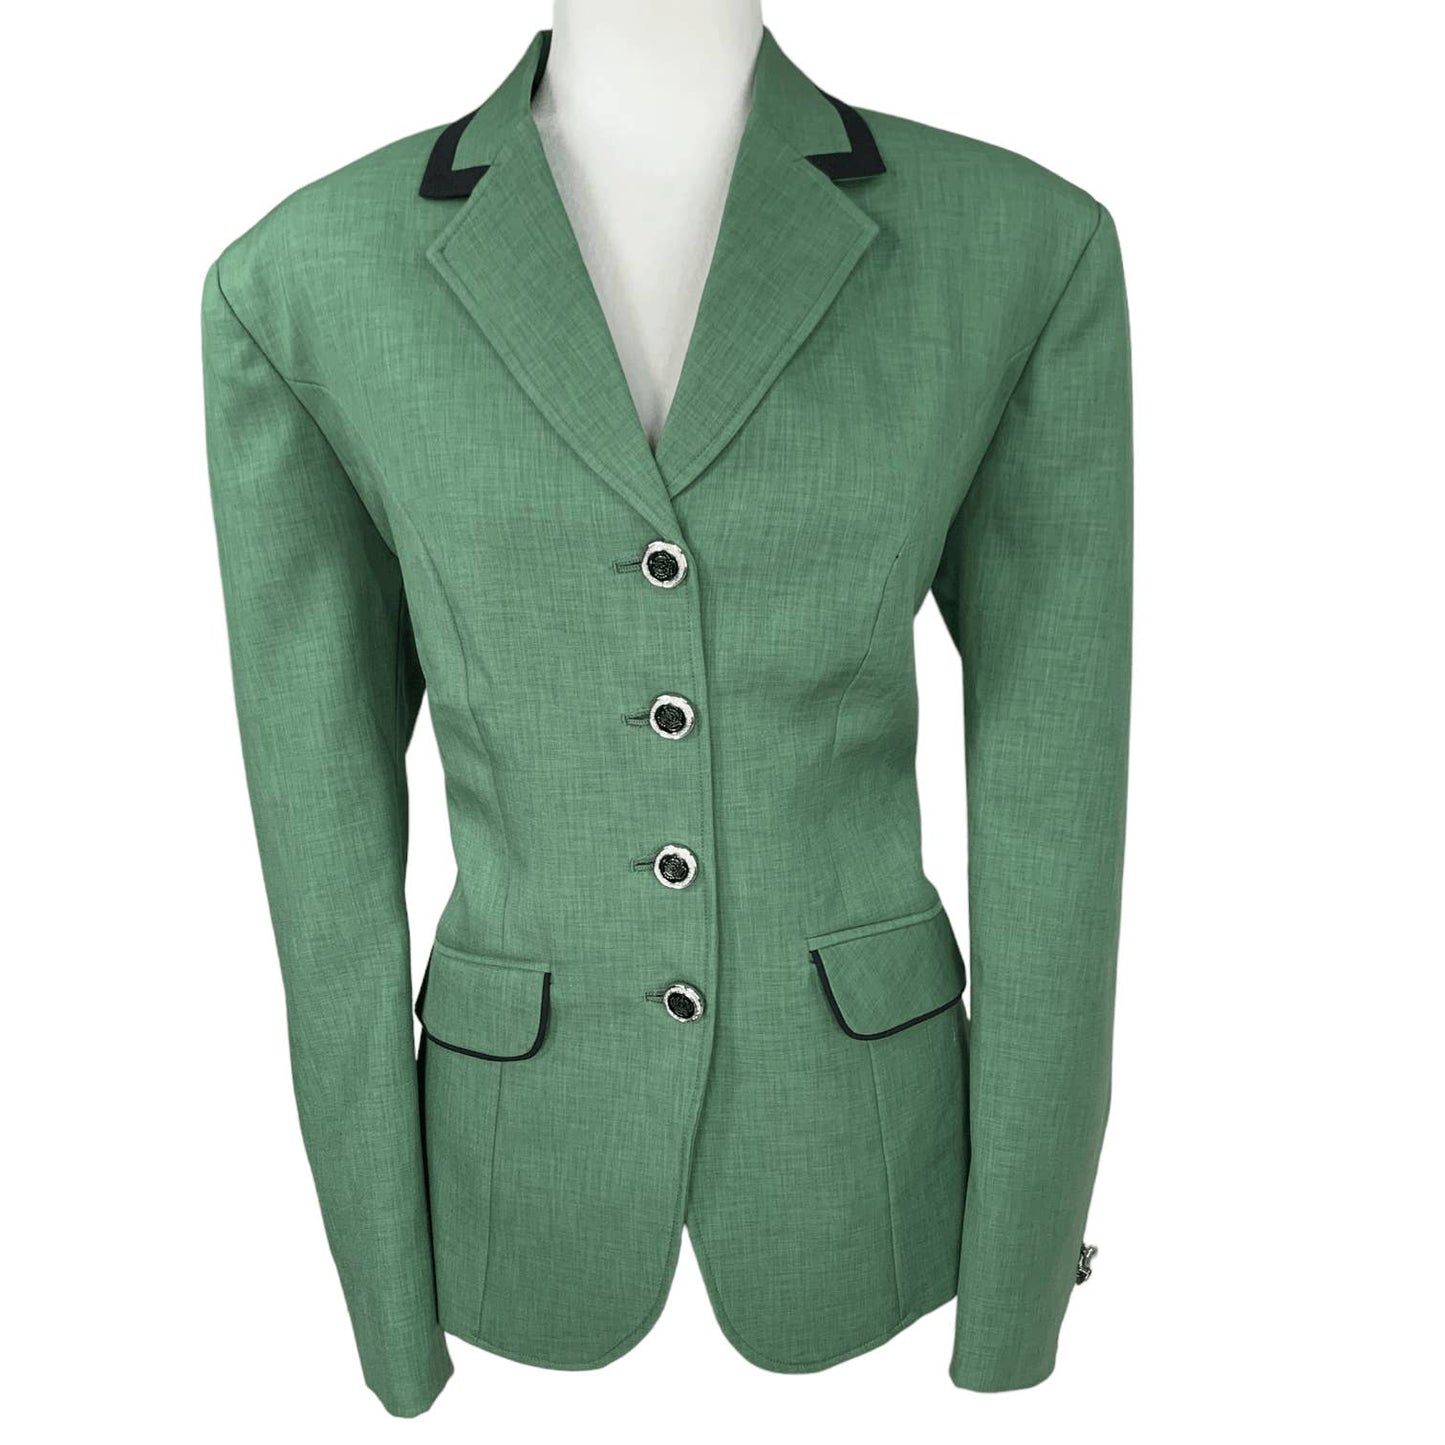 Custom-Made Show Jacket in Green - Woman's XL/XXL